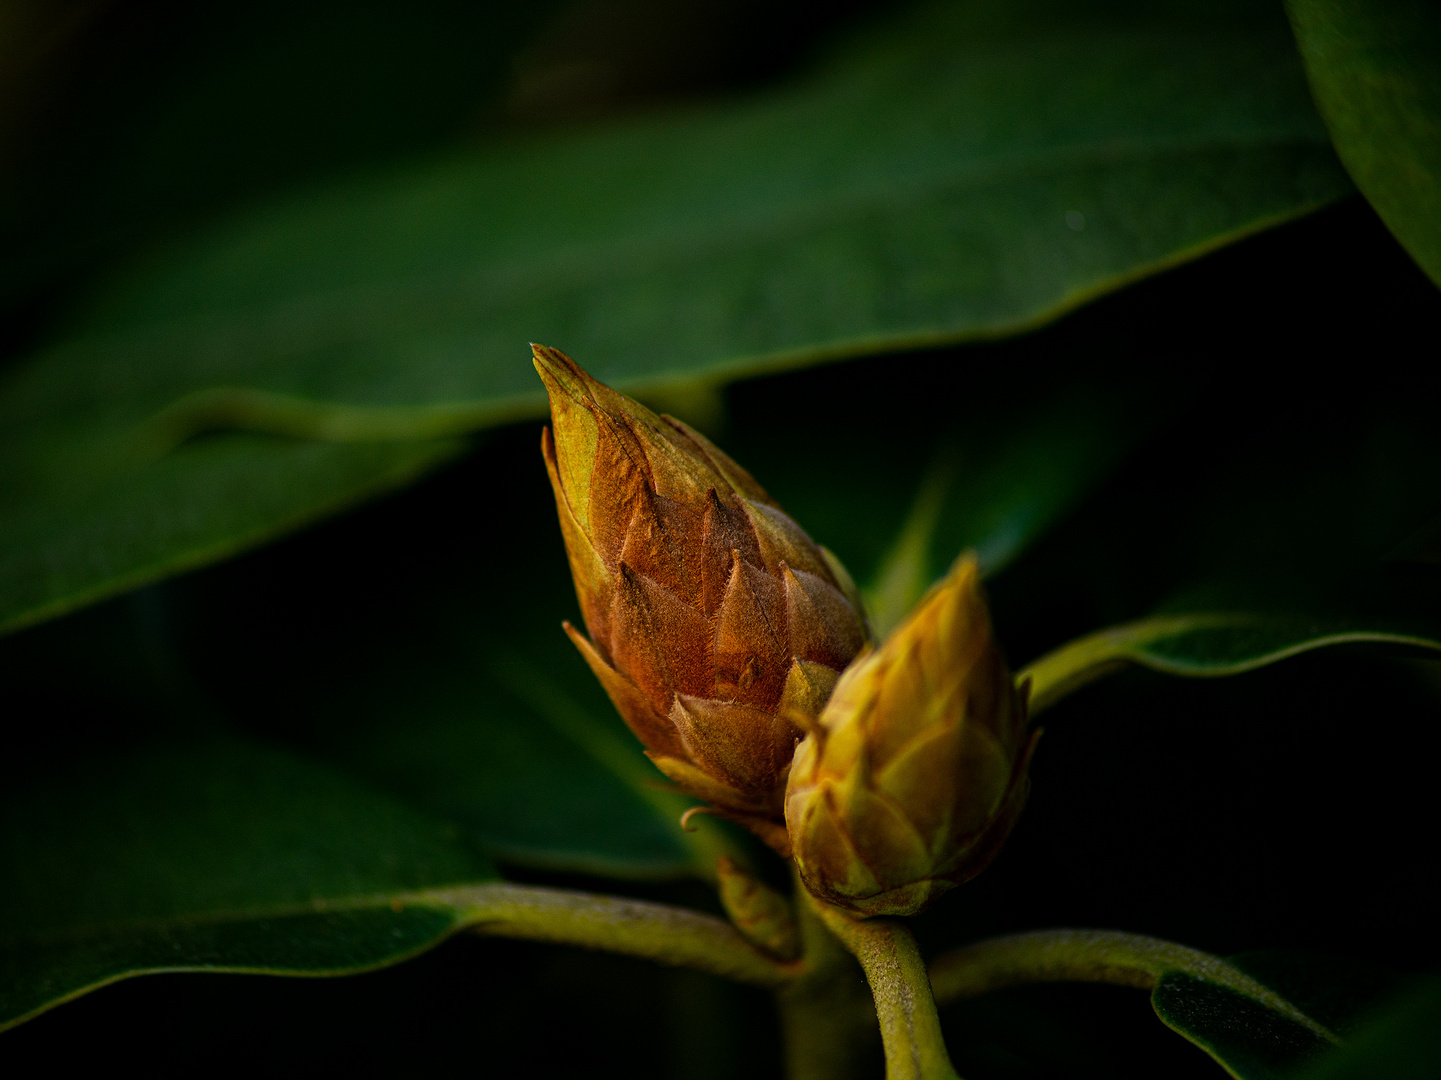 Rhododendronknospe